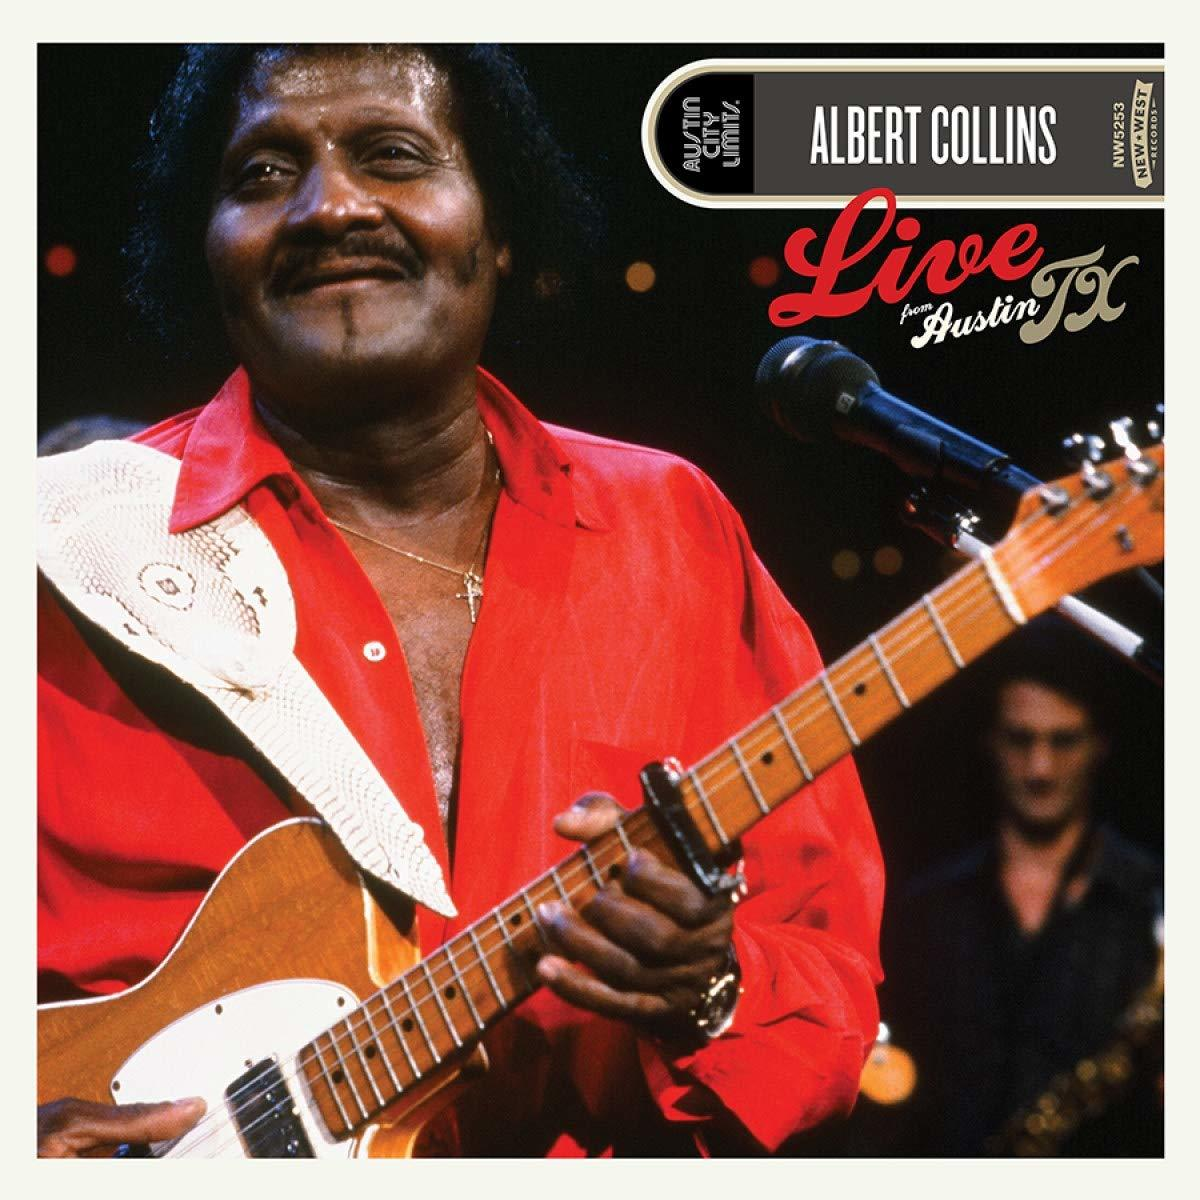 Albert Collins - Austin,TX - Live (Vinyl) (2LP,180g) From